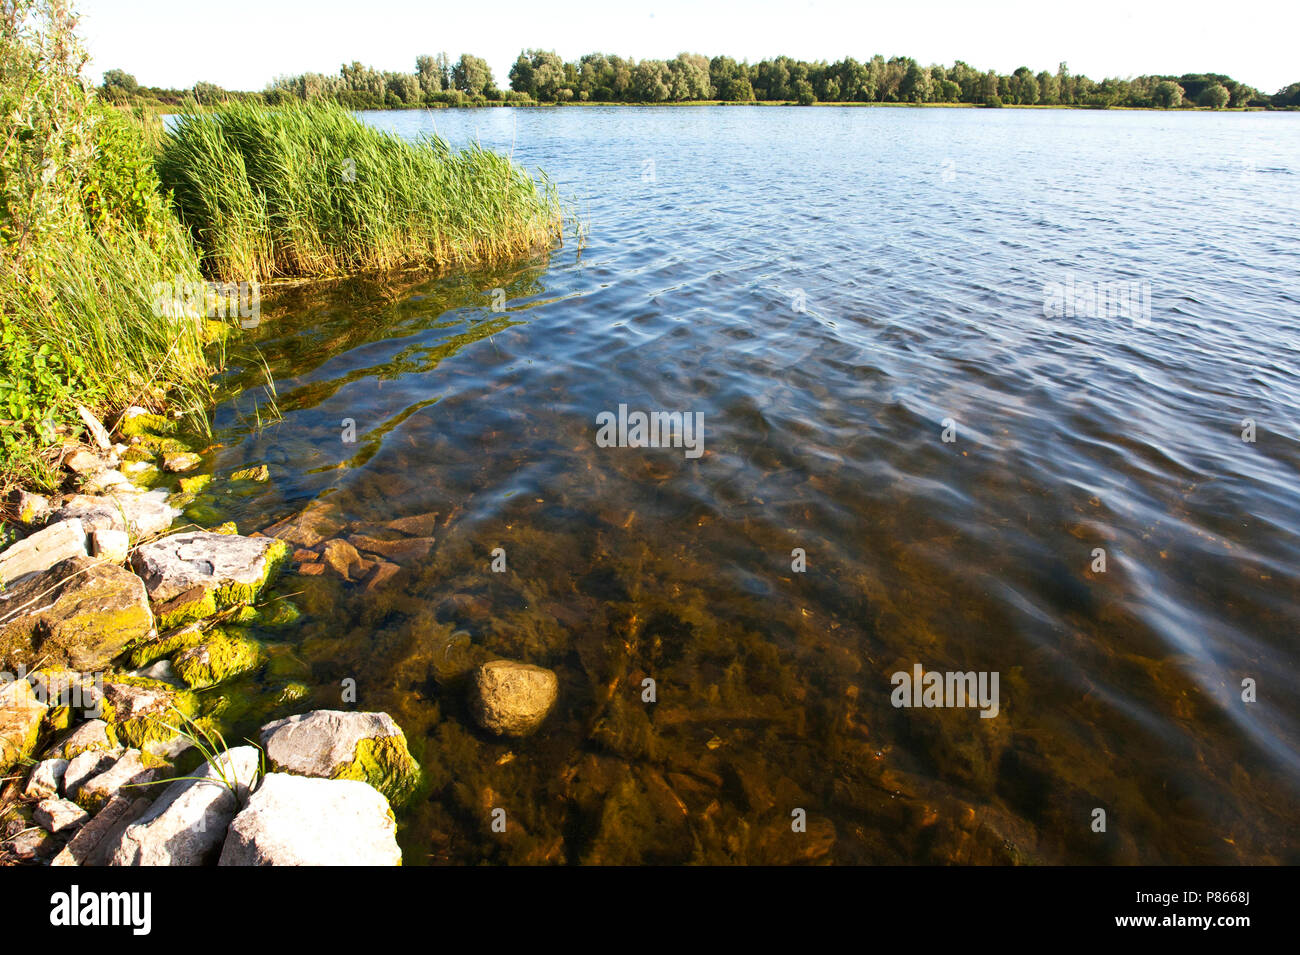 Meer in het recreatiegebied Twiske, Noord-Holland; lago nella zona di ricreazione Twikse, Paesi Bassi Foto Stock